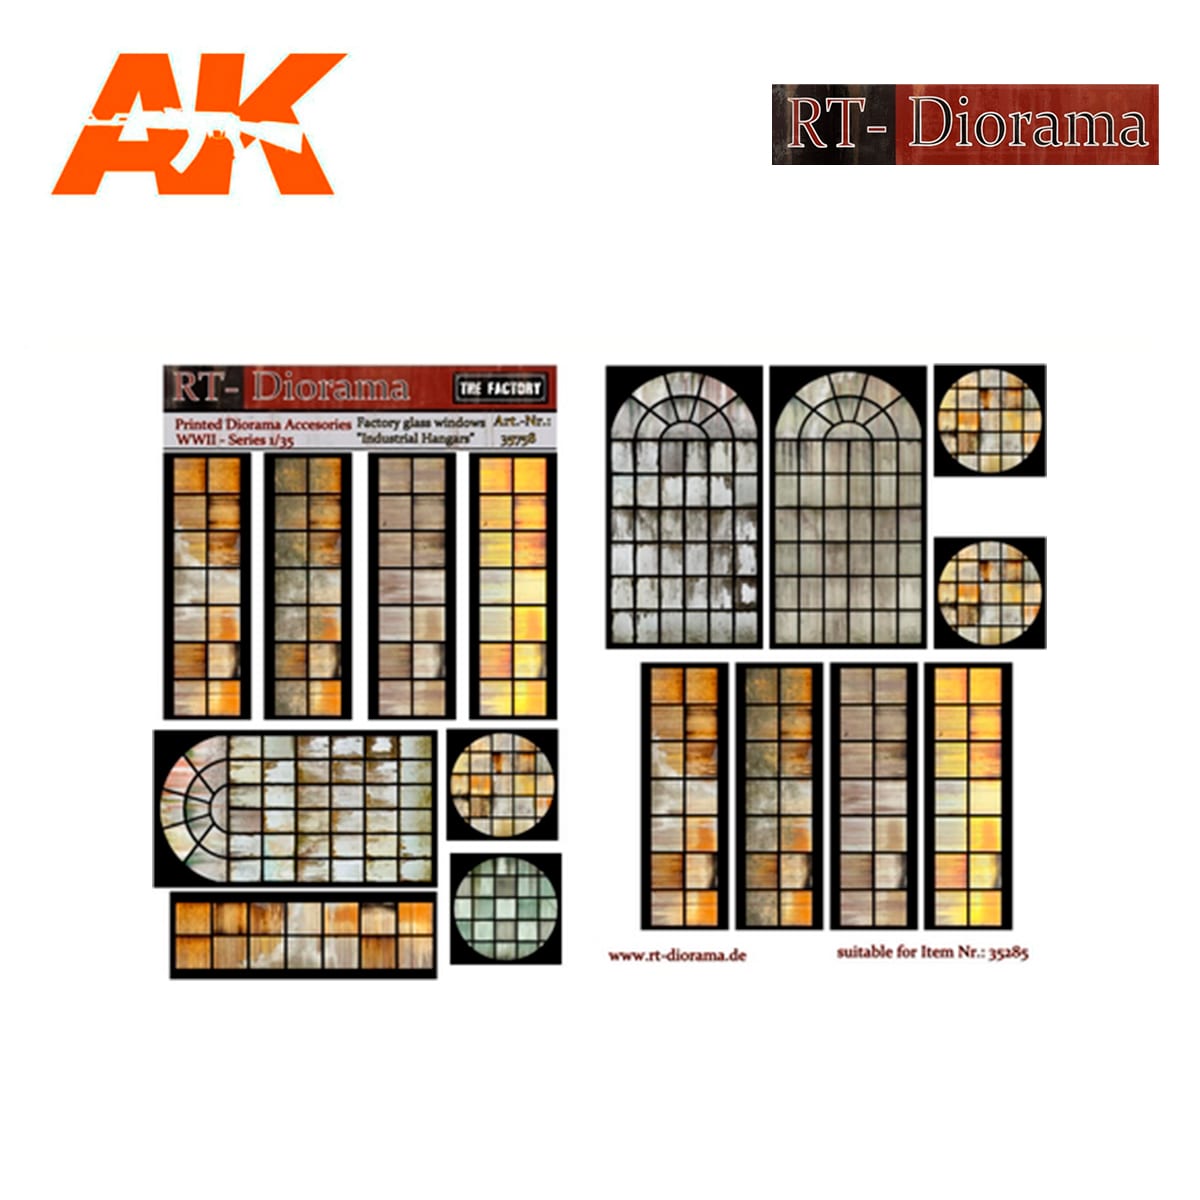 Printed Accesories: Factory glass windows “Industrial Hangars”